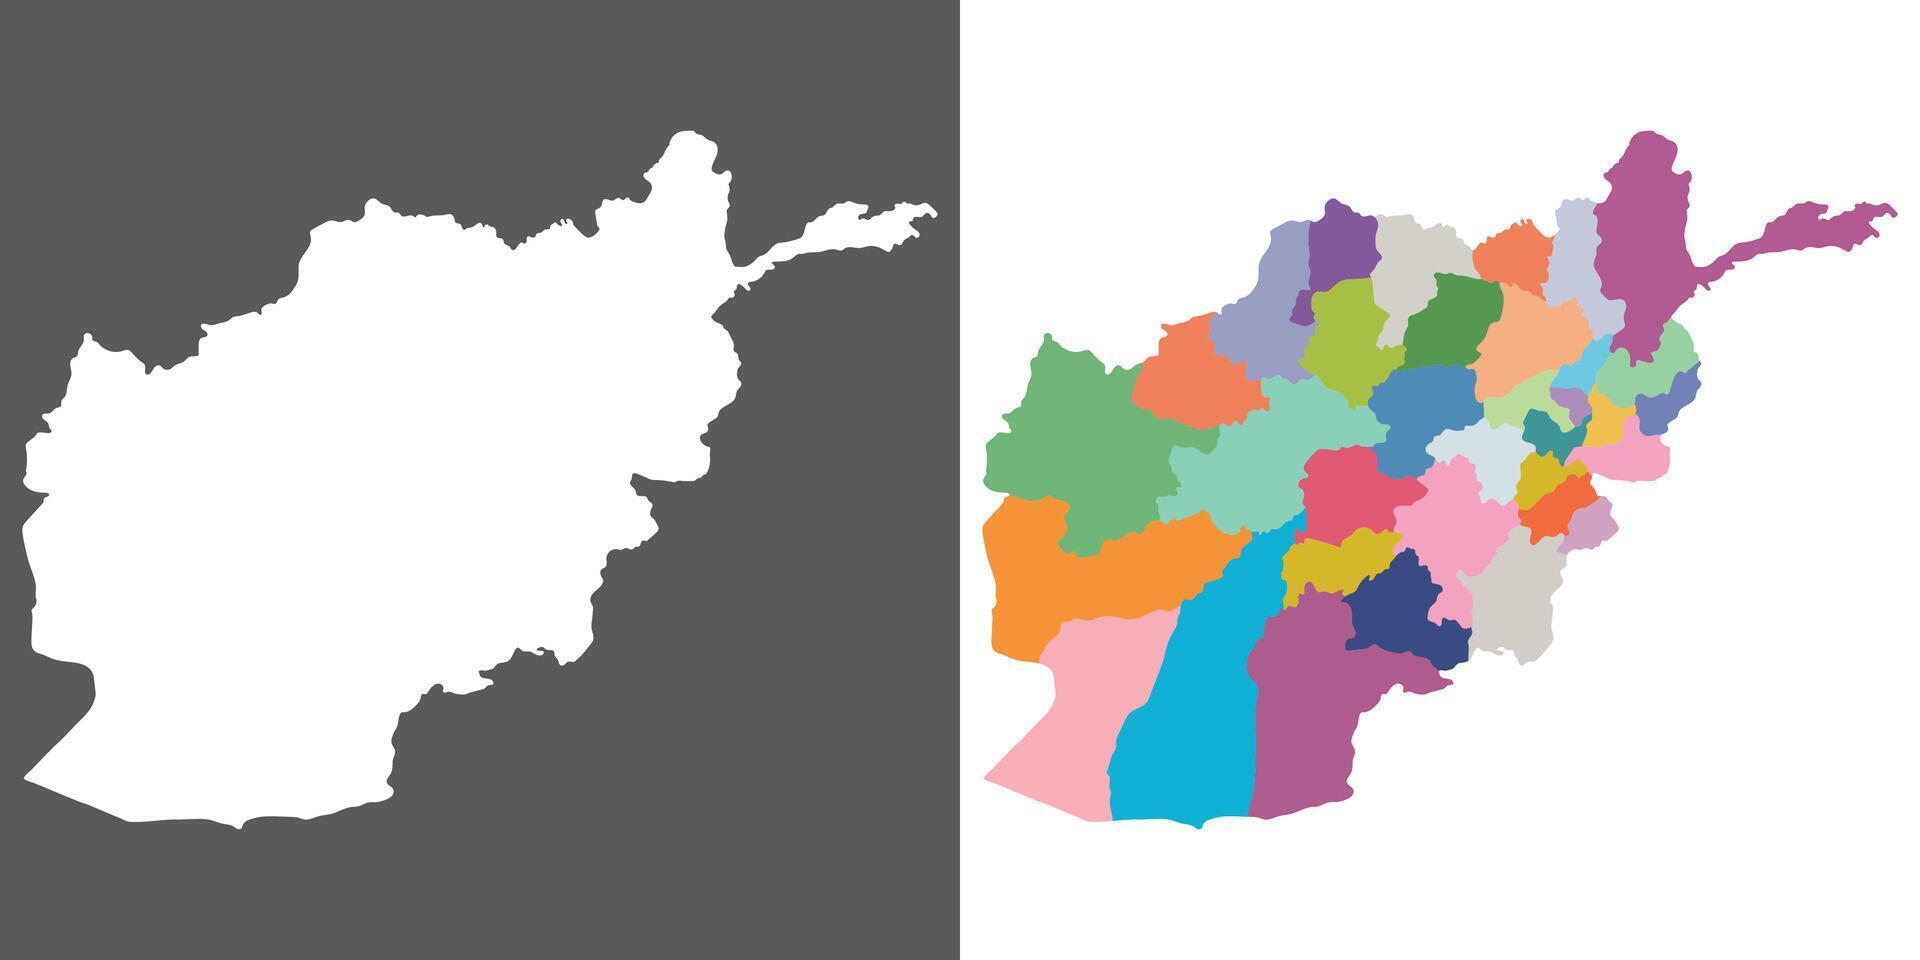 afghanistan carta geografica. carta geografica di afghanistan nel impostato vettore